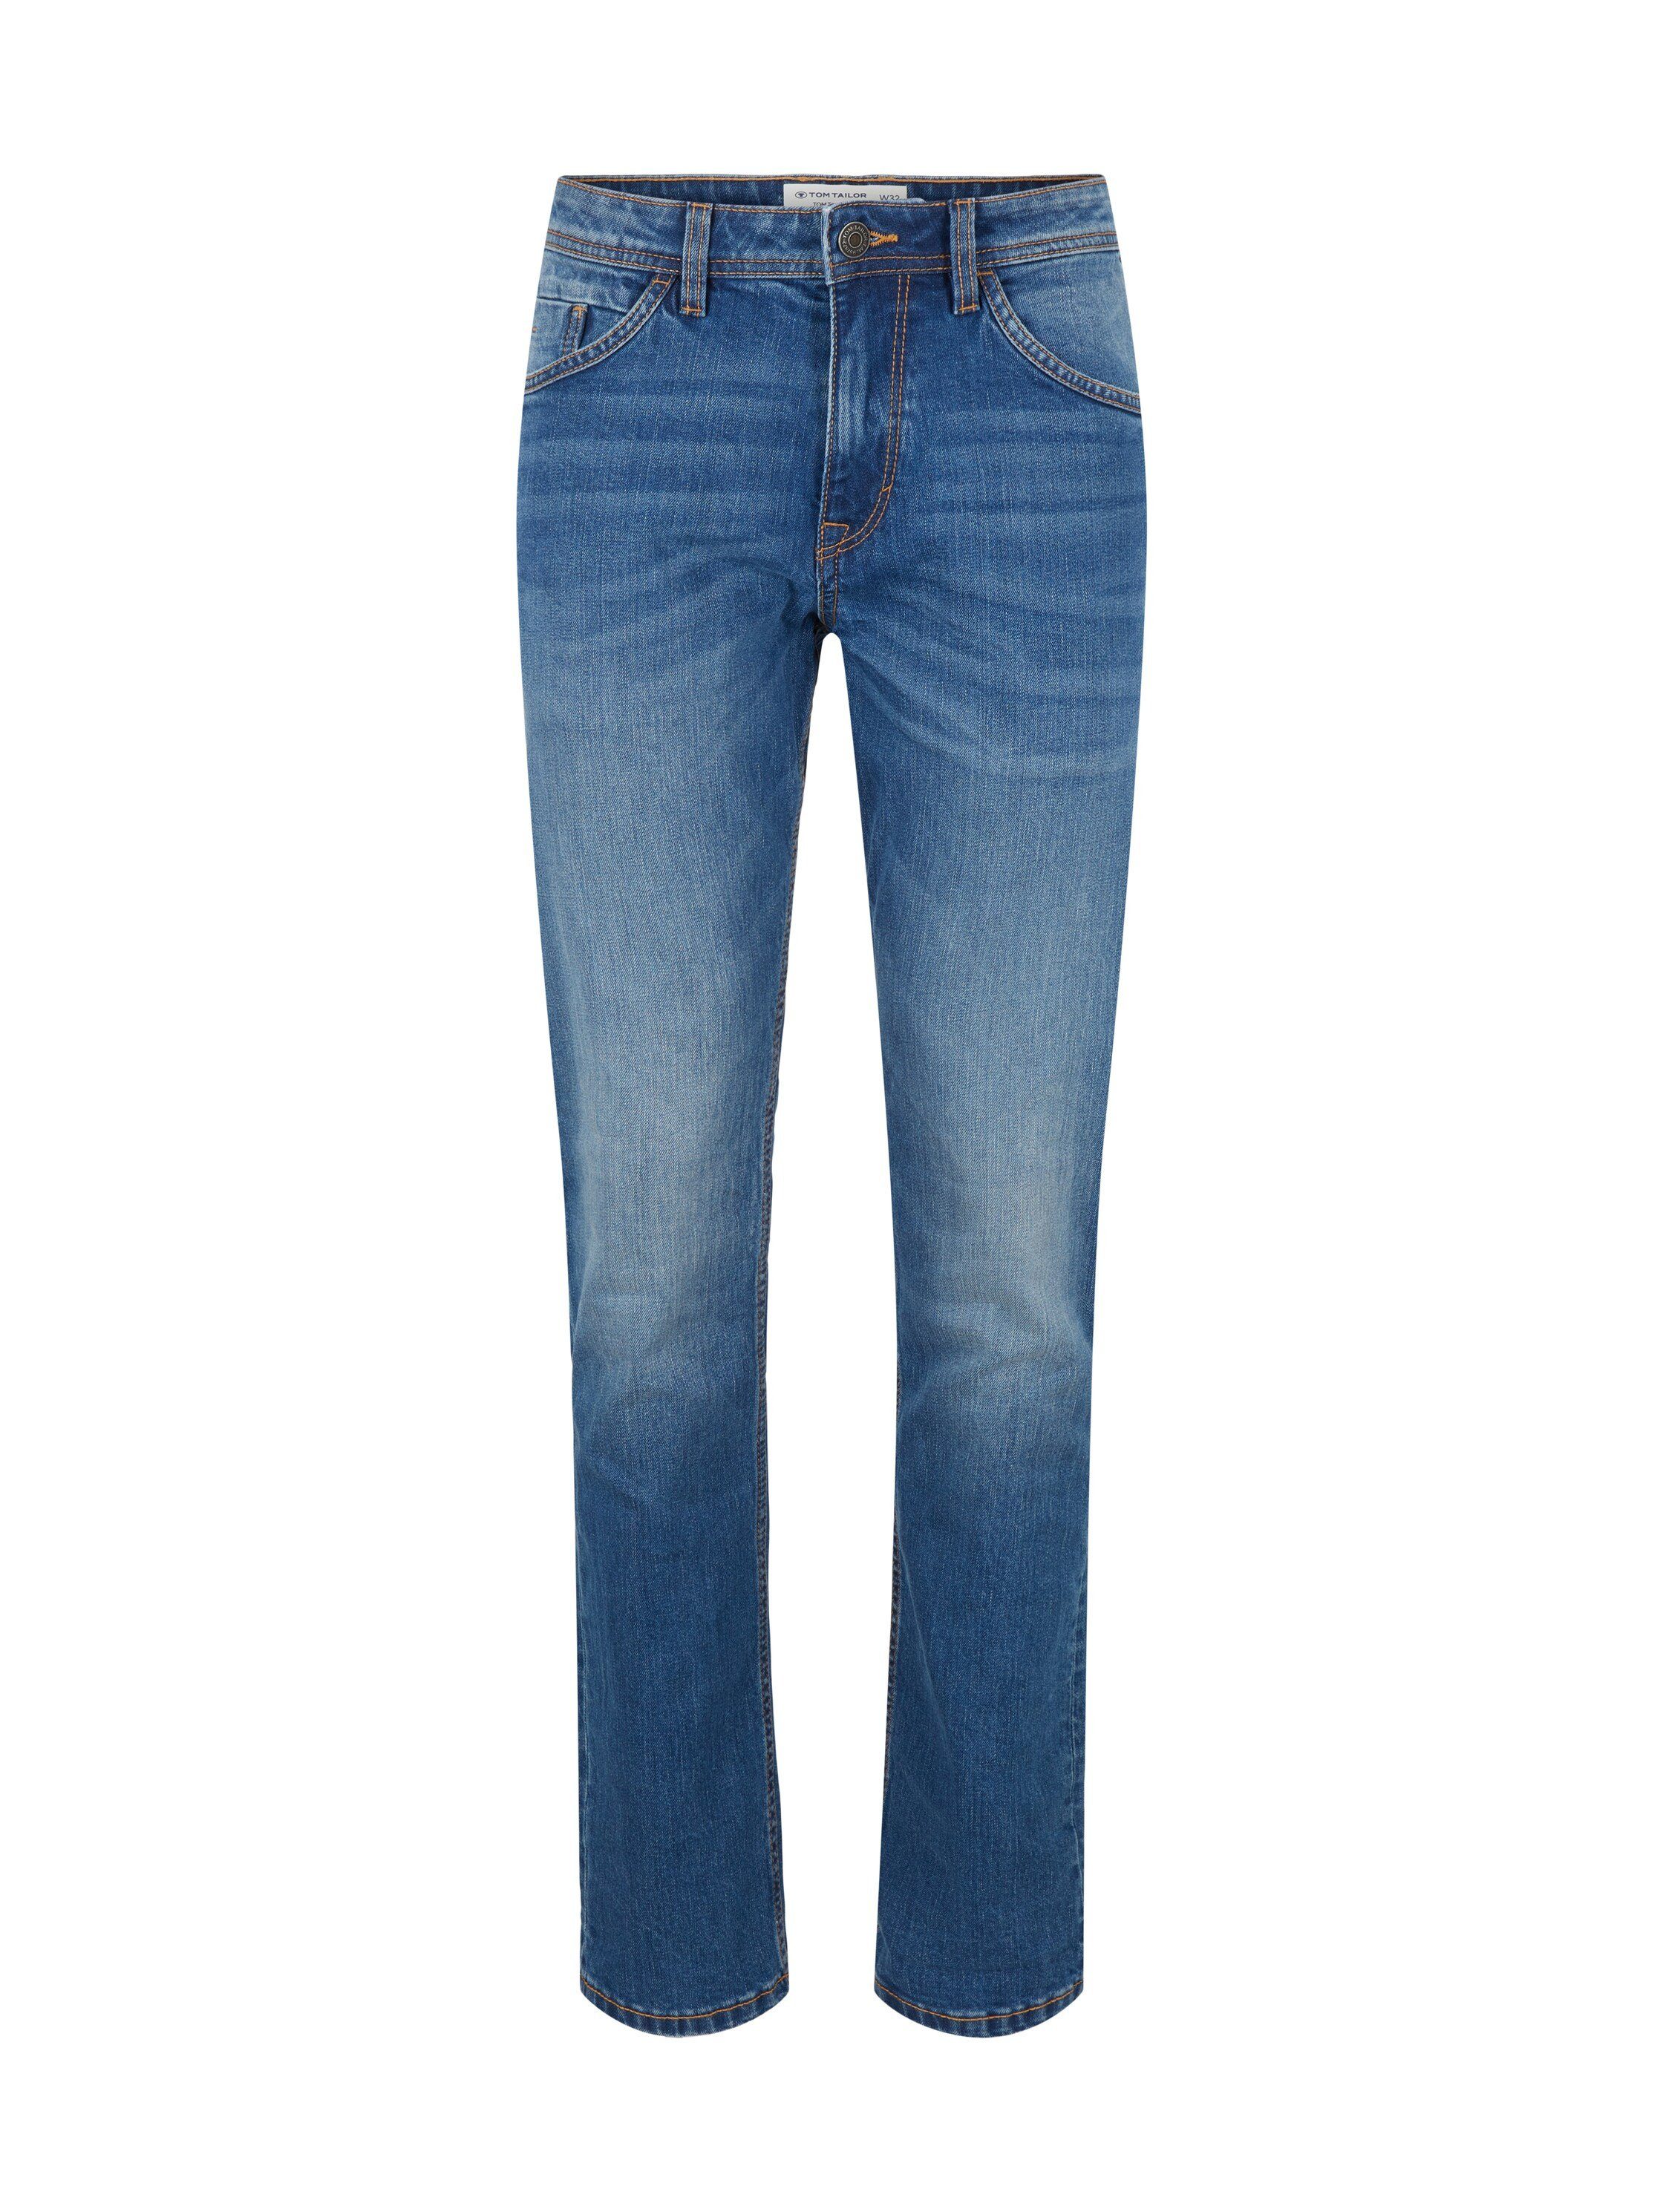 mid TOM Jeans Slim-fit-Jeans used blue stone Slim-Fit denim TAILOR